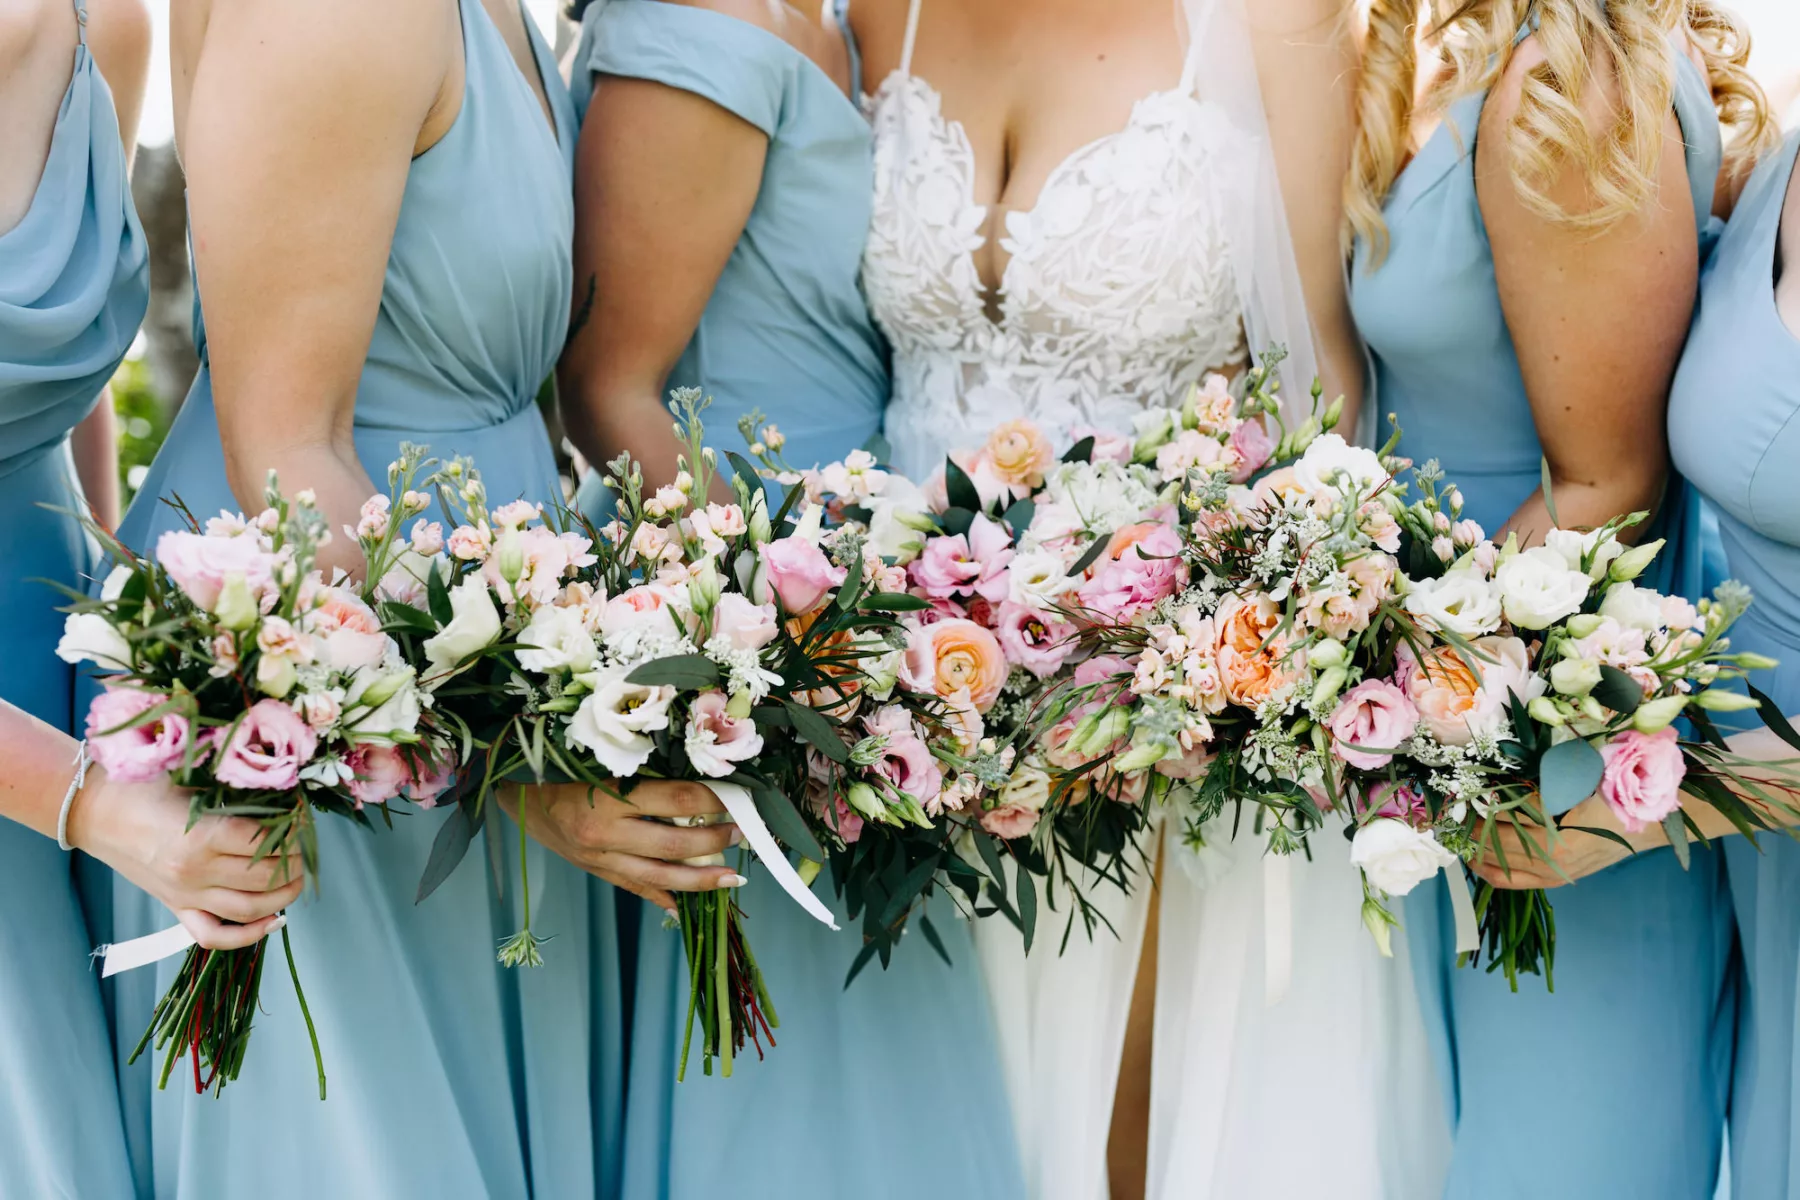 Pink Garden Roses, Orange Ranunculus, White Hydrangeas, and Greenery Summer Wedding Bouquet Inspiration | Tampa Bay Florist Beneva Flowers